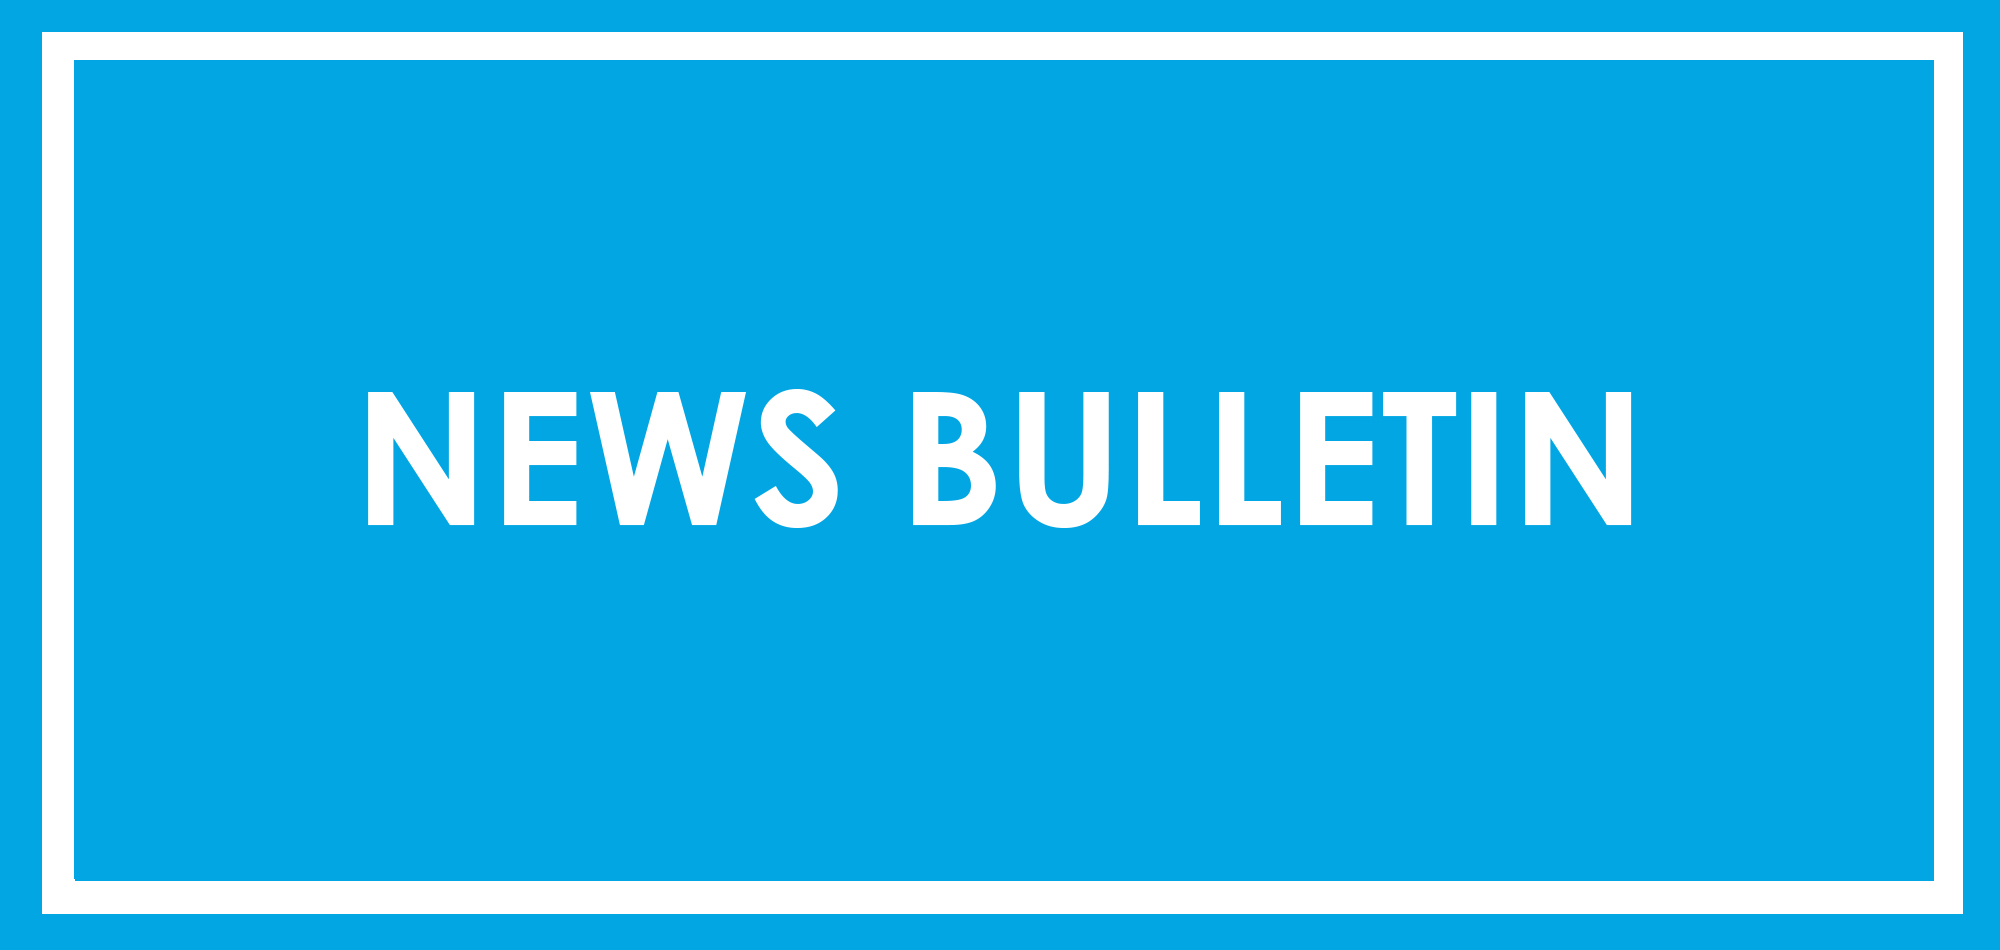 News Bulletin - 25.01.21